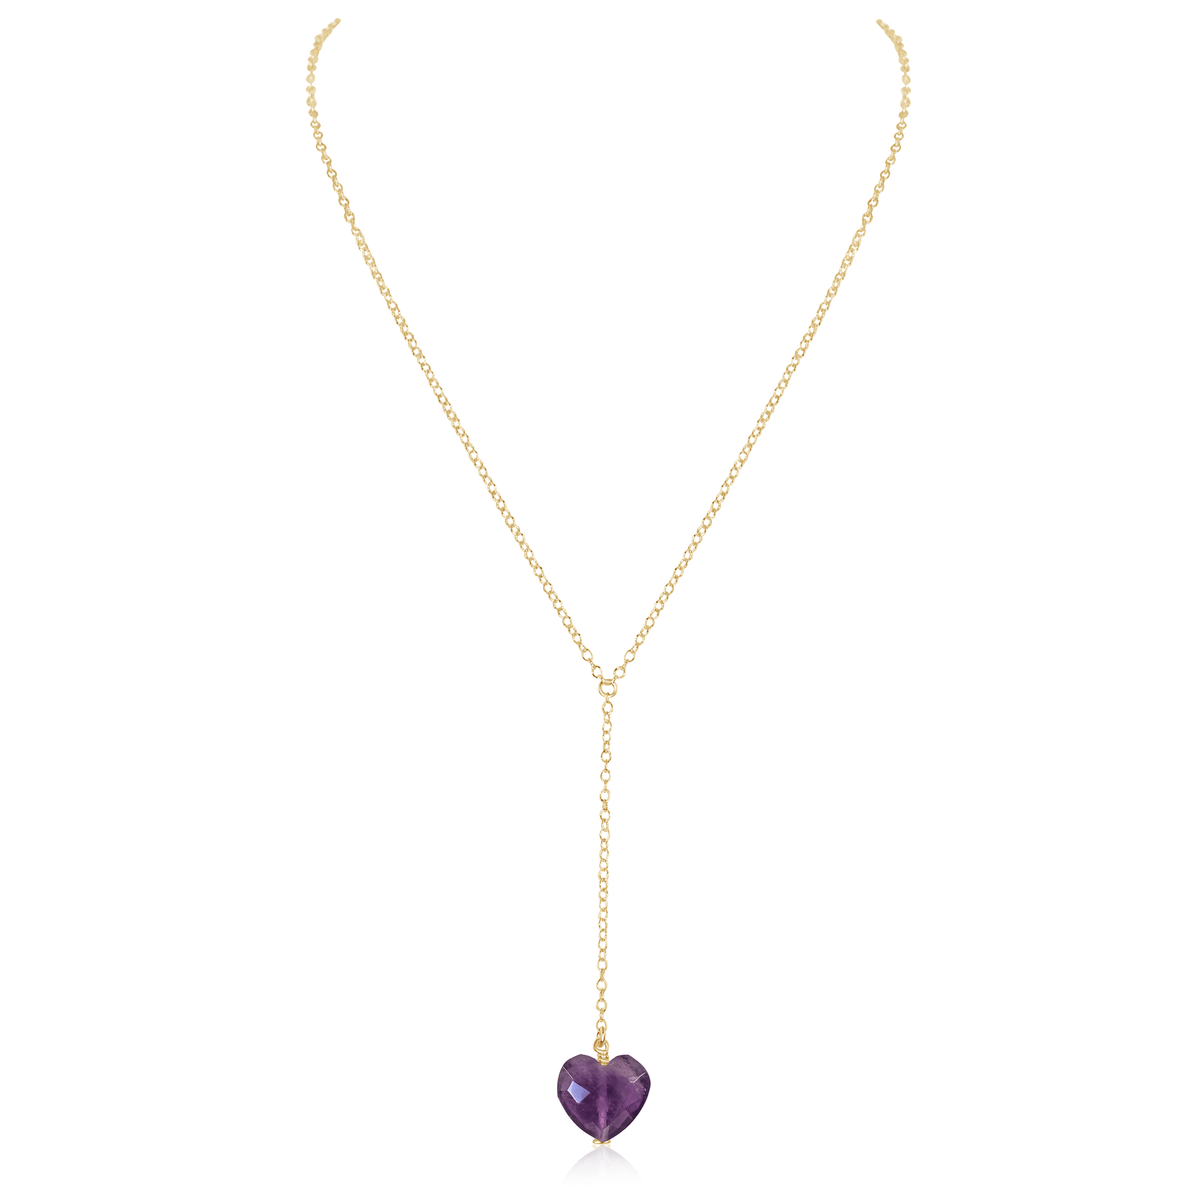 Amethyst Crystal Heart Lariat Necklace - Amethyst Crystal Heart Lariat Necklace - 14k Gold Fill - Luna Tide Handmade Crystal Jewellery